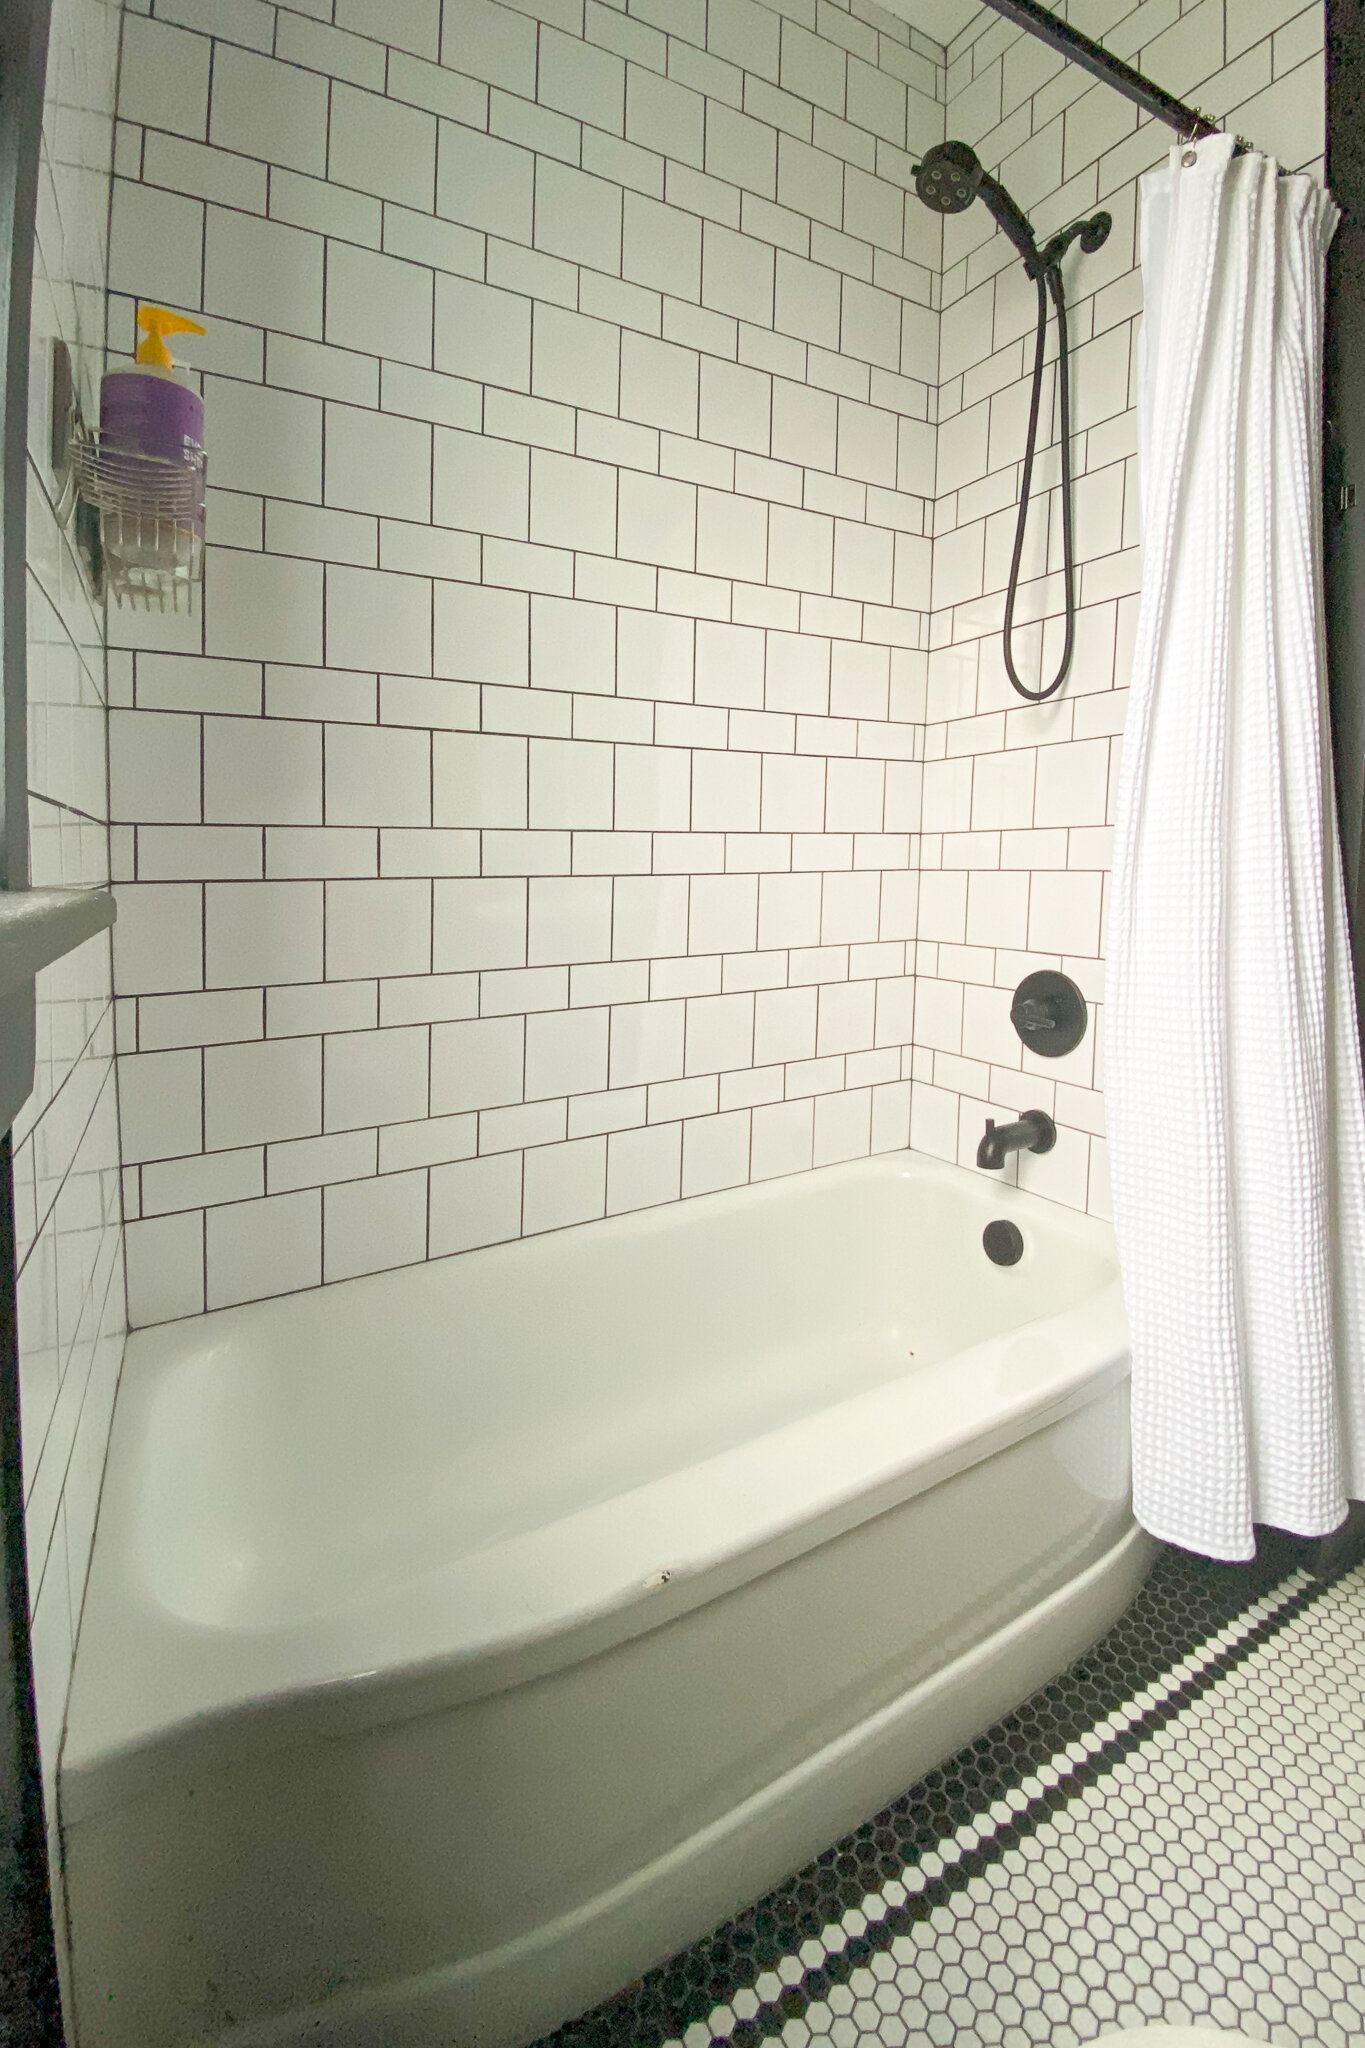 Historic Bathroom Tile Designs Orc, Bathtub Tile Ideas